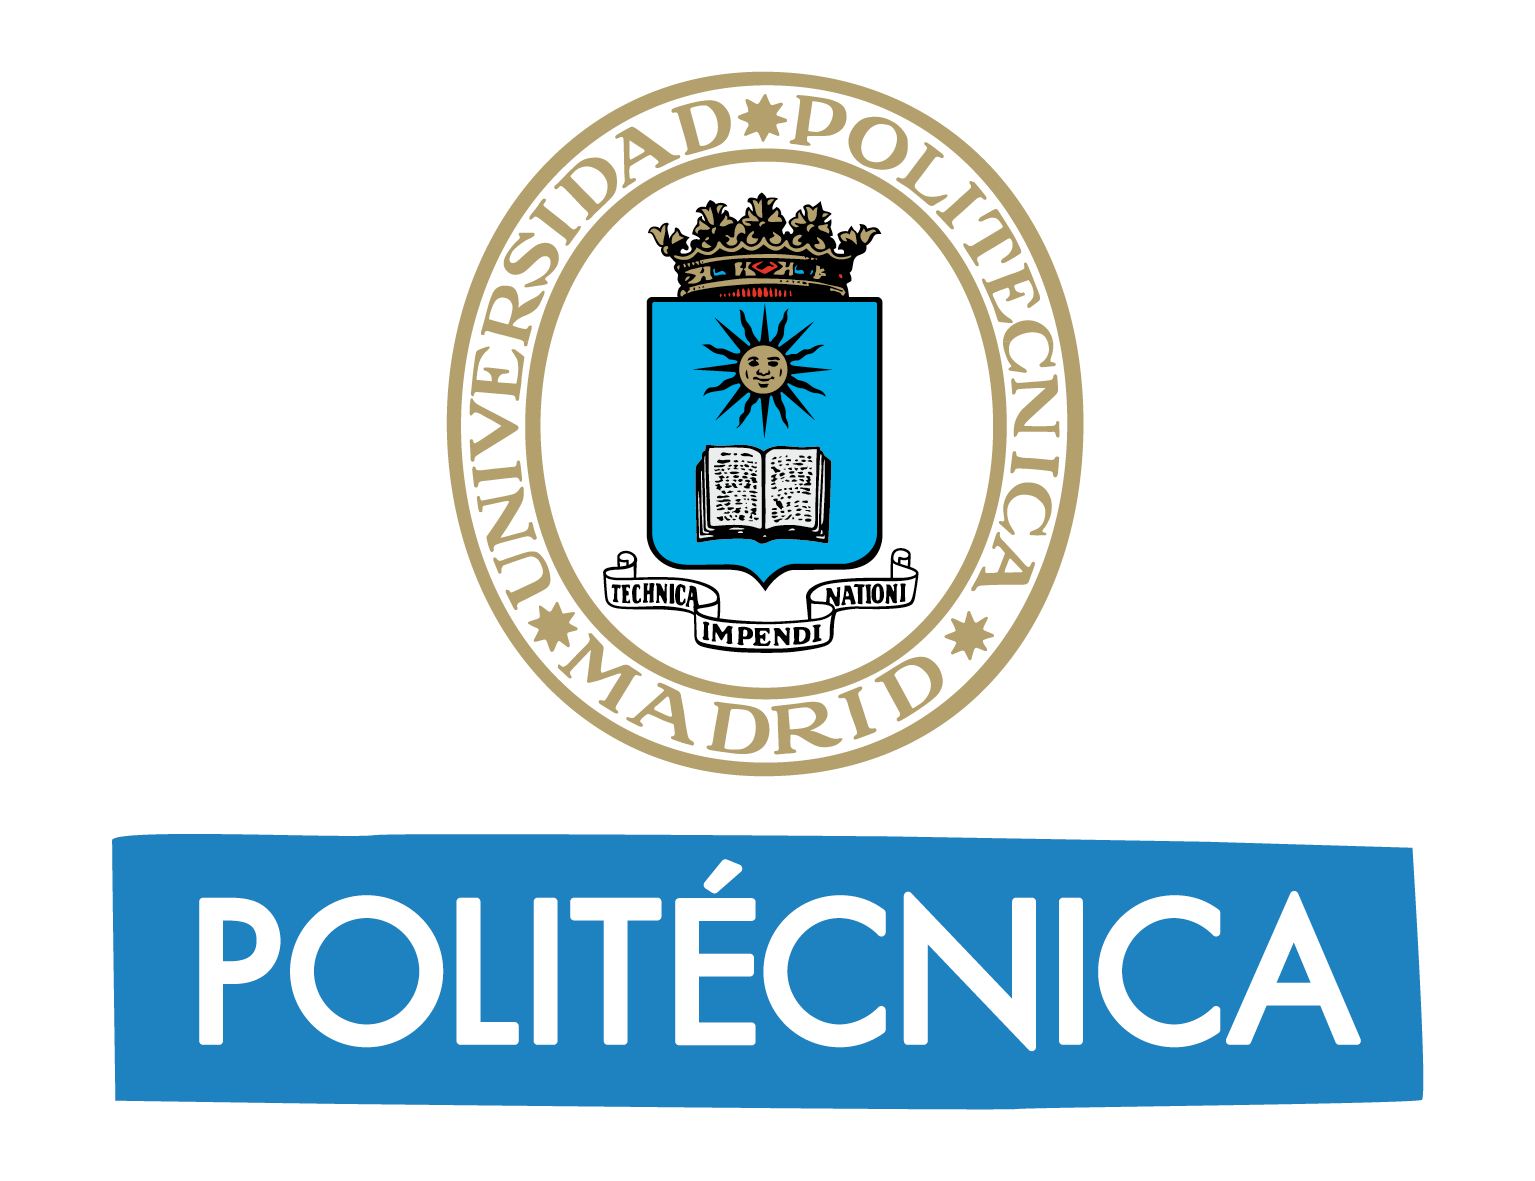 logo Universidad Politécnica de Madrid